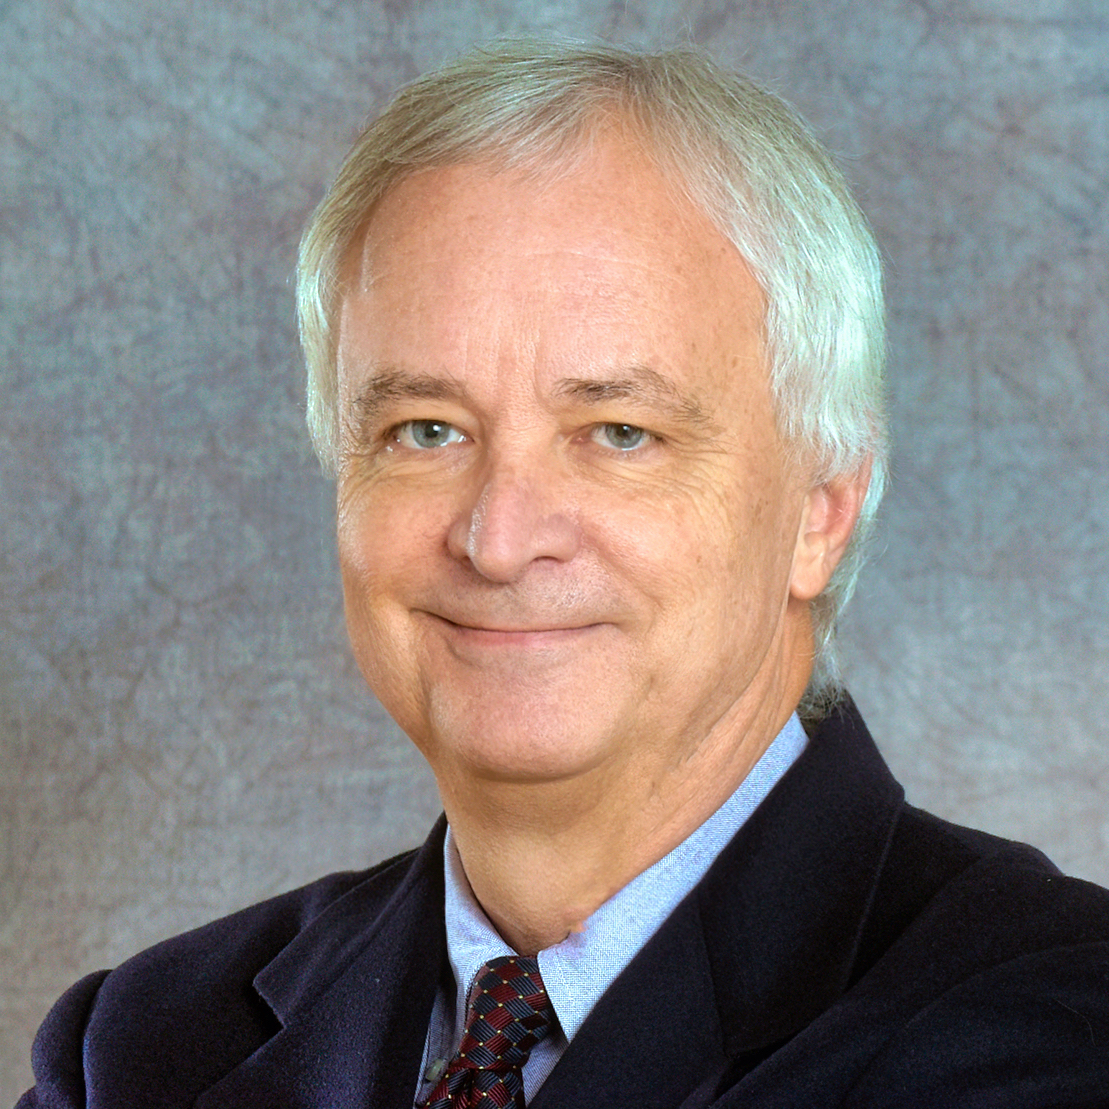 Dr. Mark Sauer